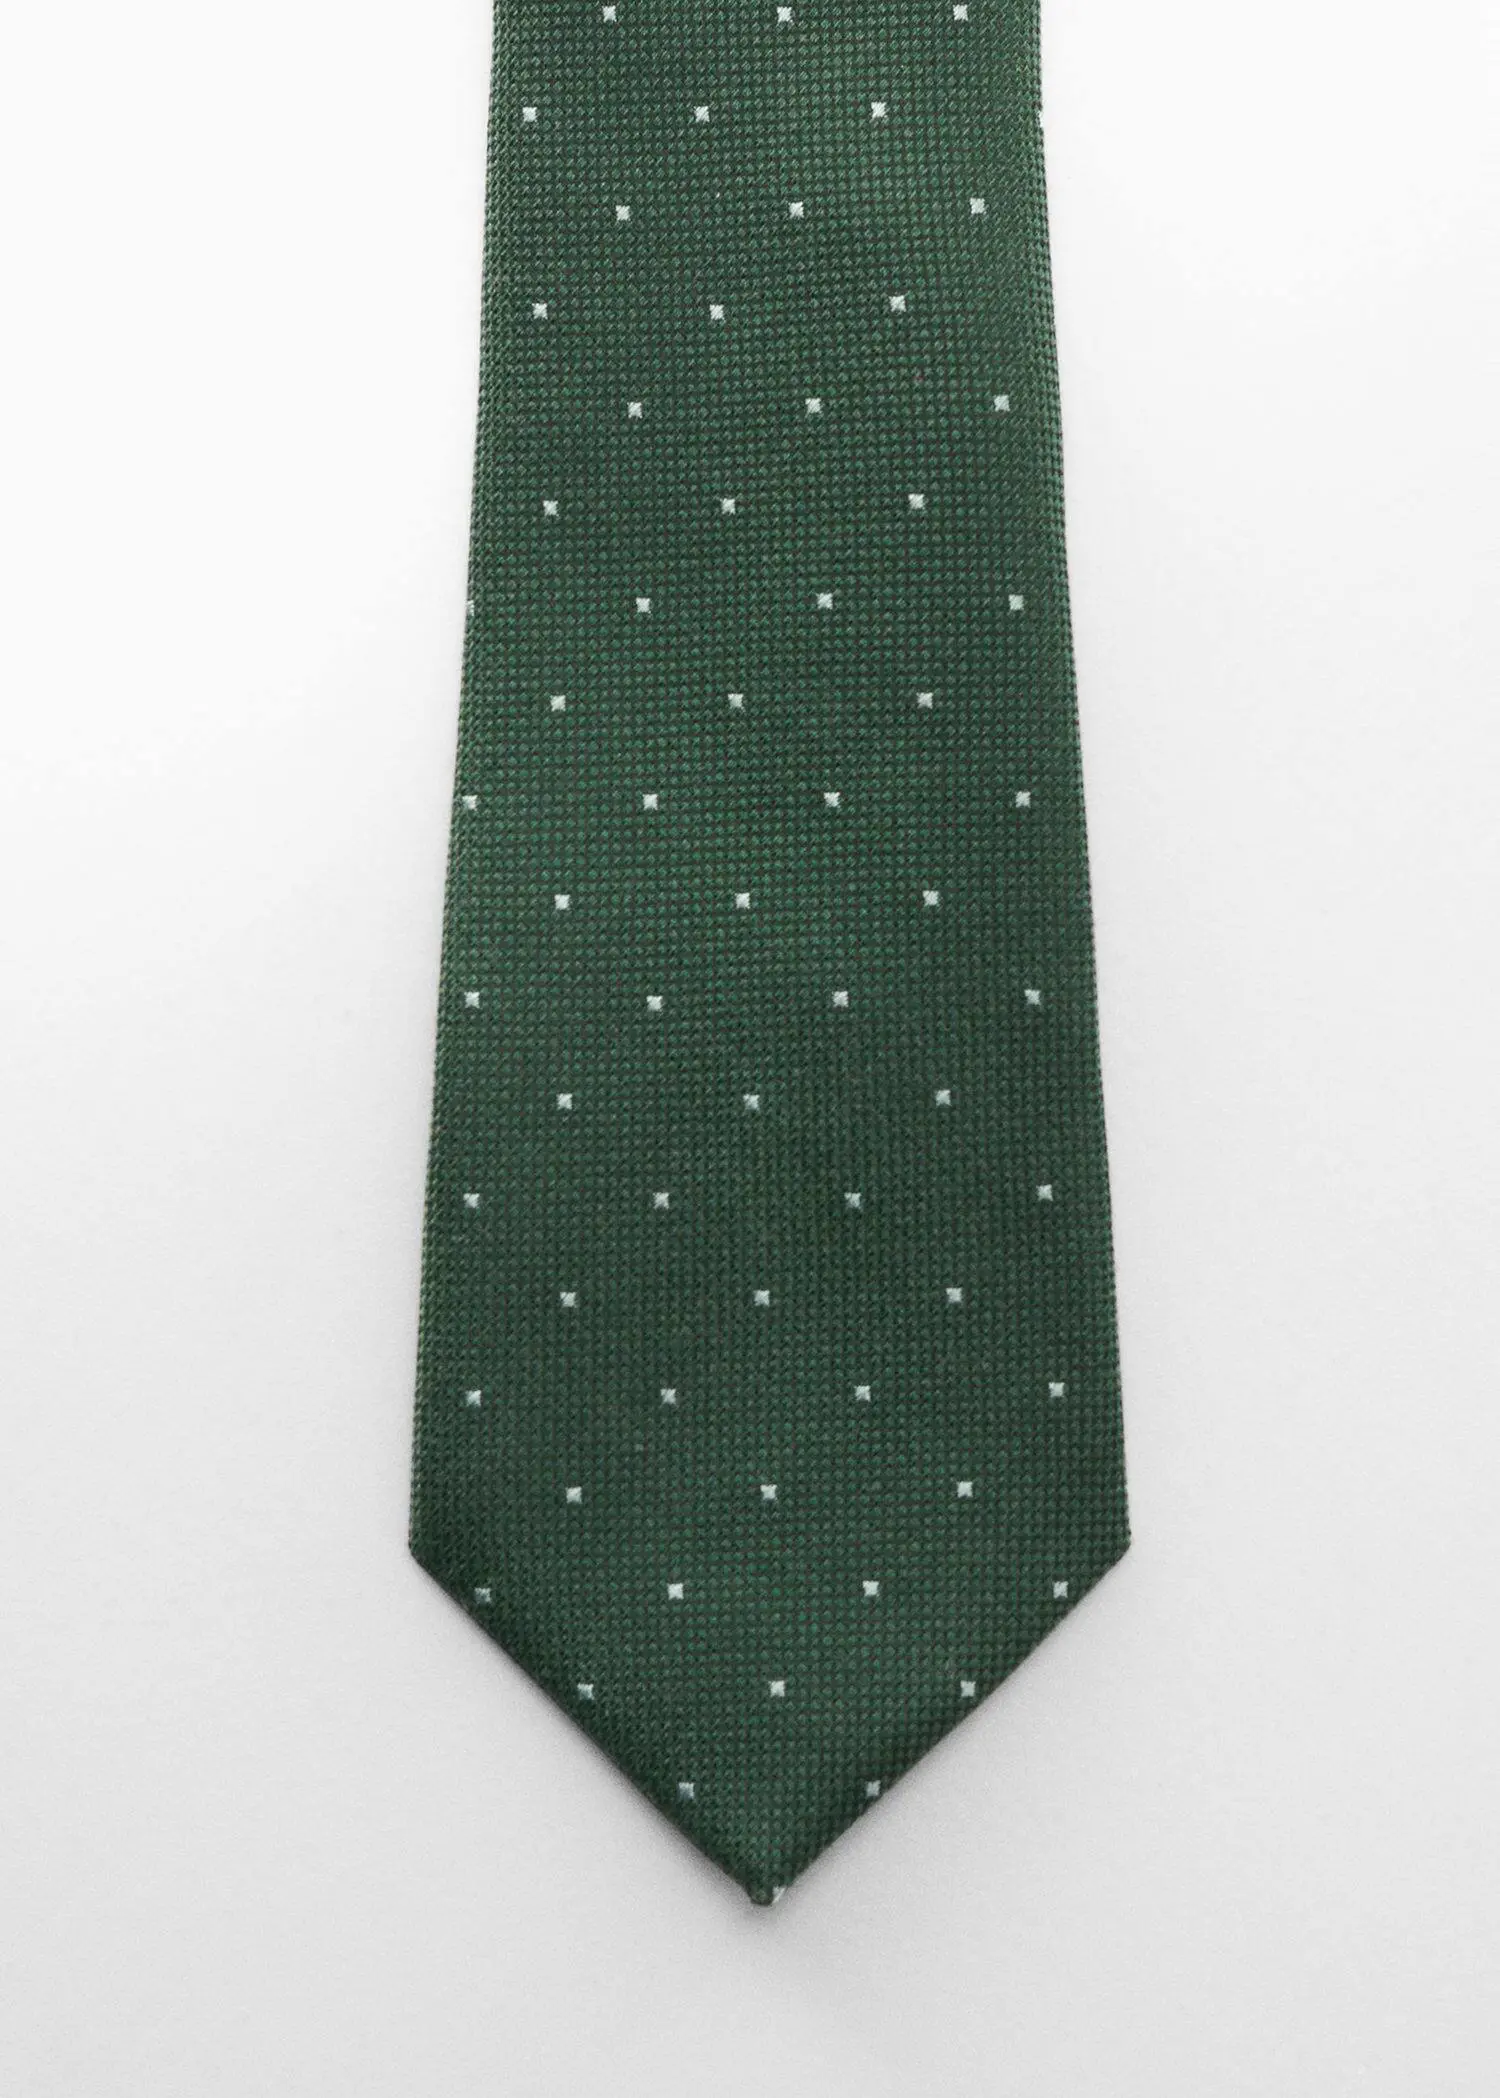 Mango Mikro puantiyeli biçimli kravat. 3